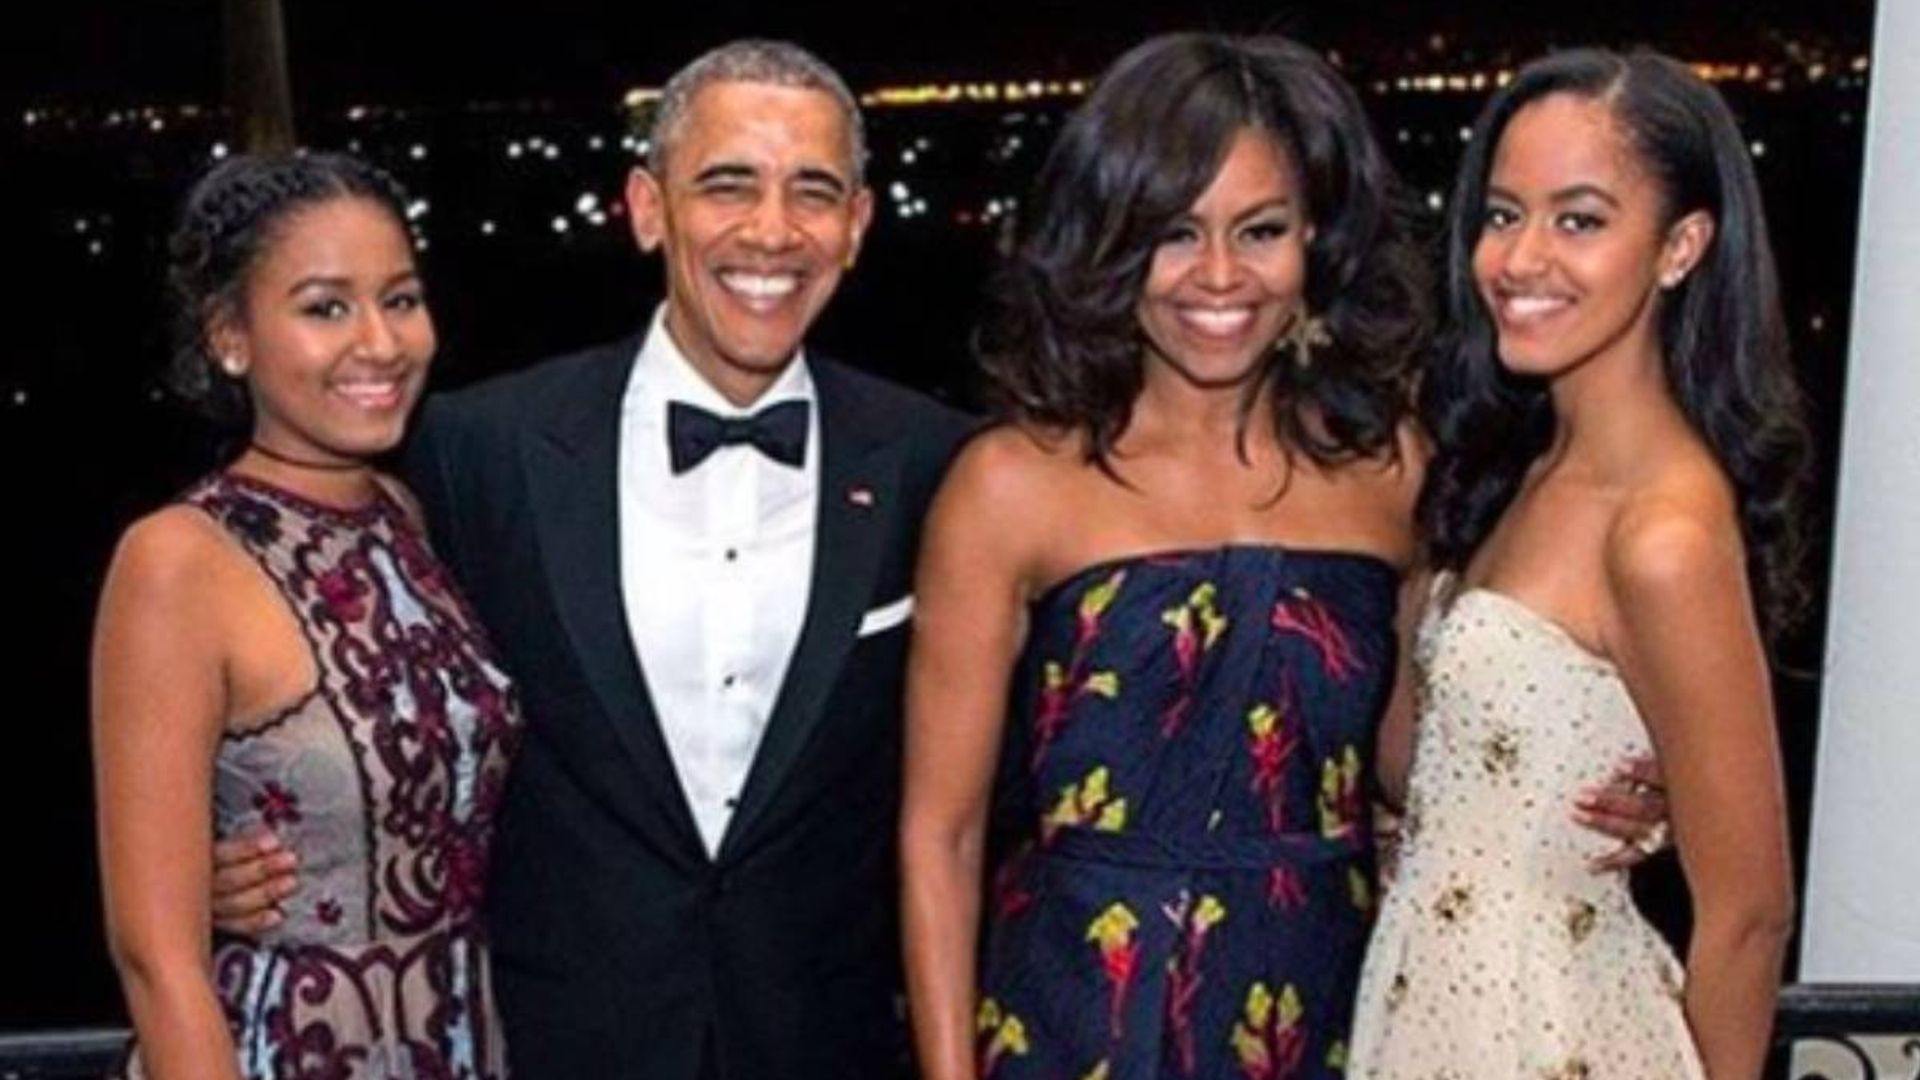 Michelle Obama shares rare family photo inside stylish home office in Washington